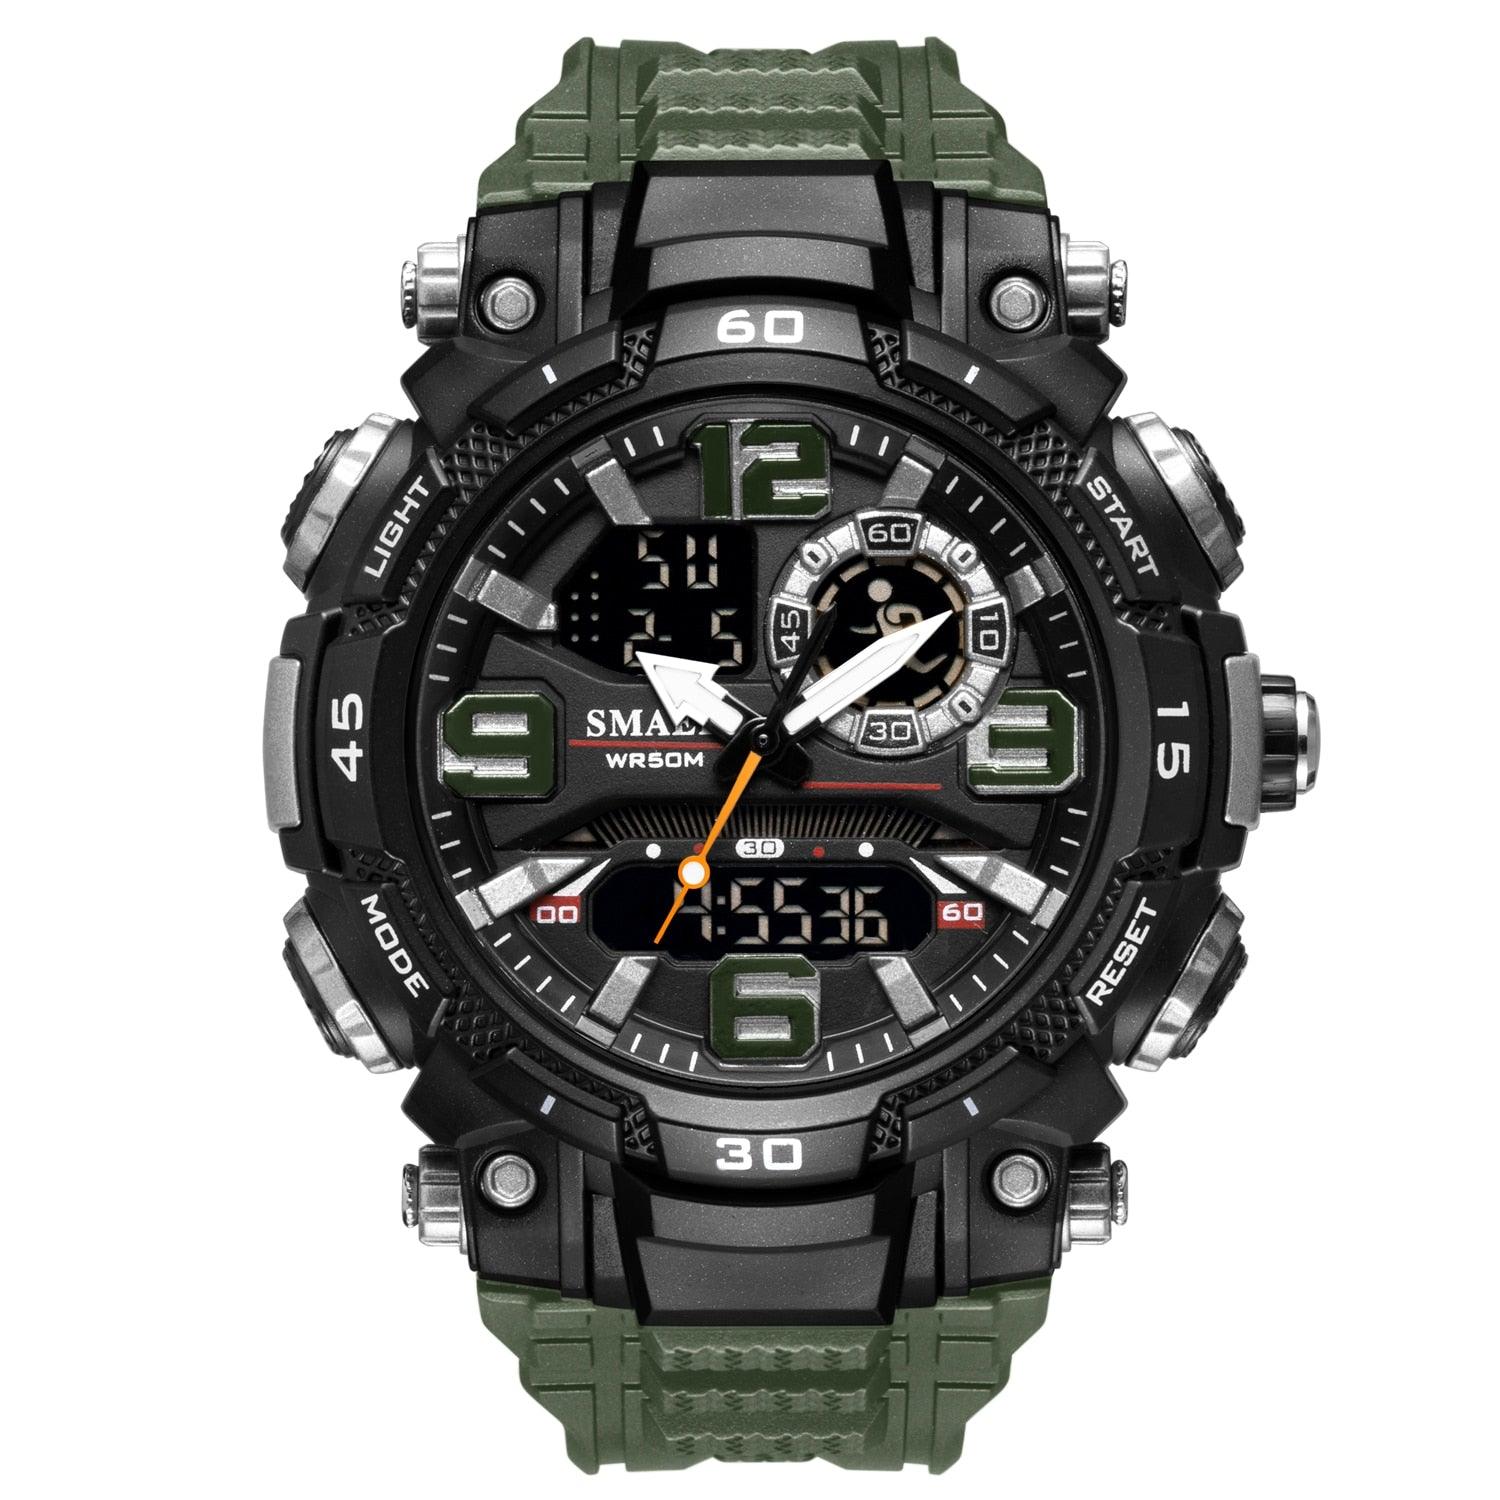 Quartz Watch For Men - Waterproof Stopwatch LED - Male Clock - Sport Watches Men relogio masculino Digital (MA9)(RW)(1U84)